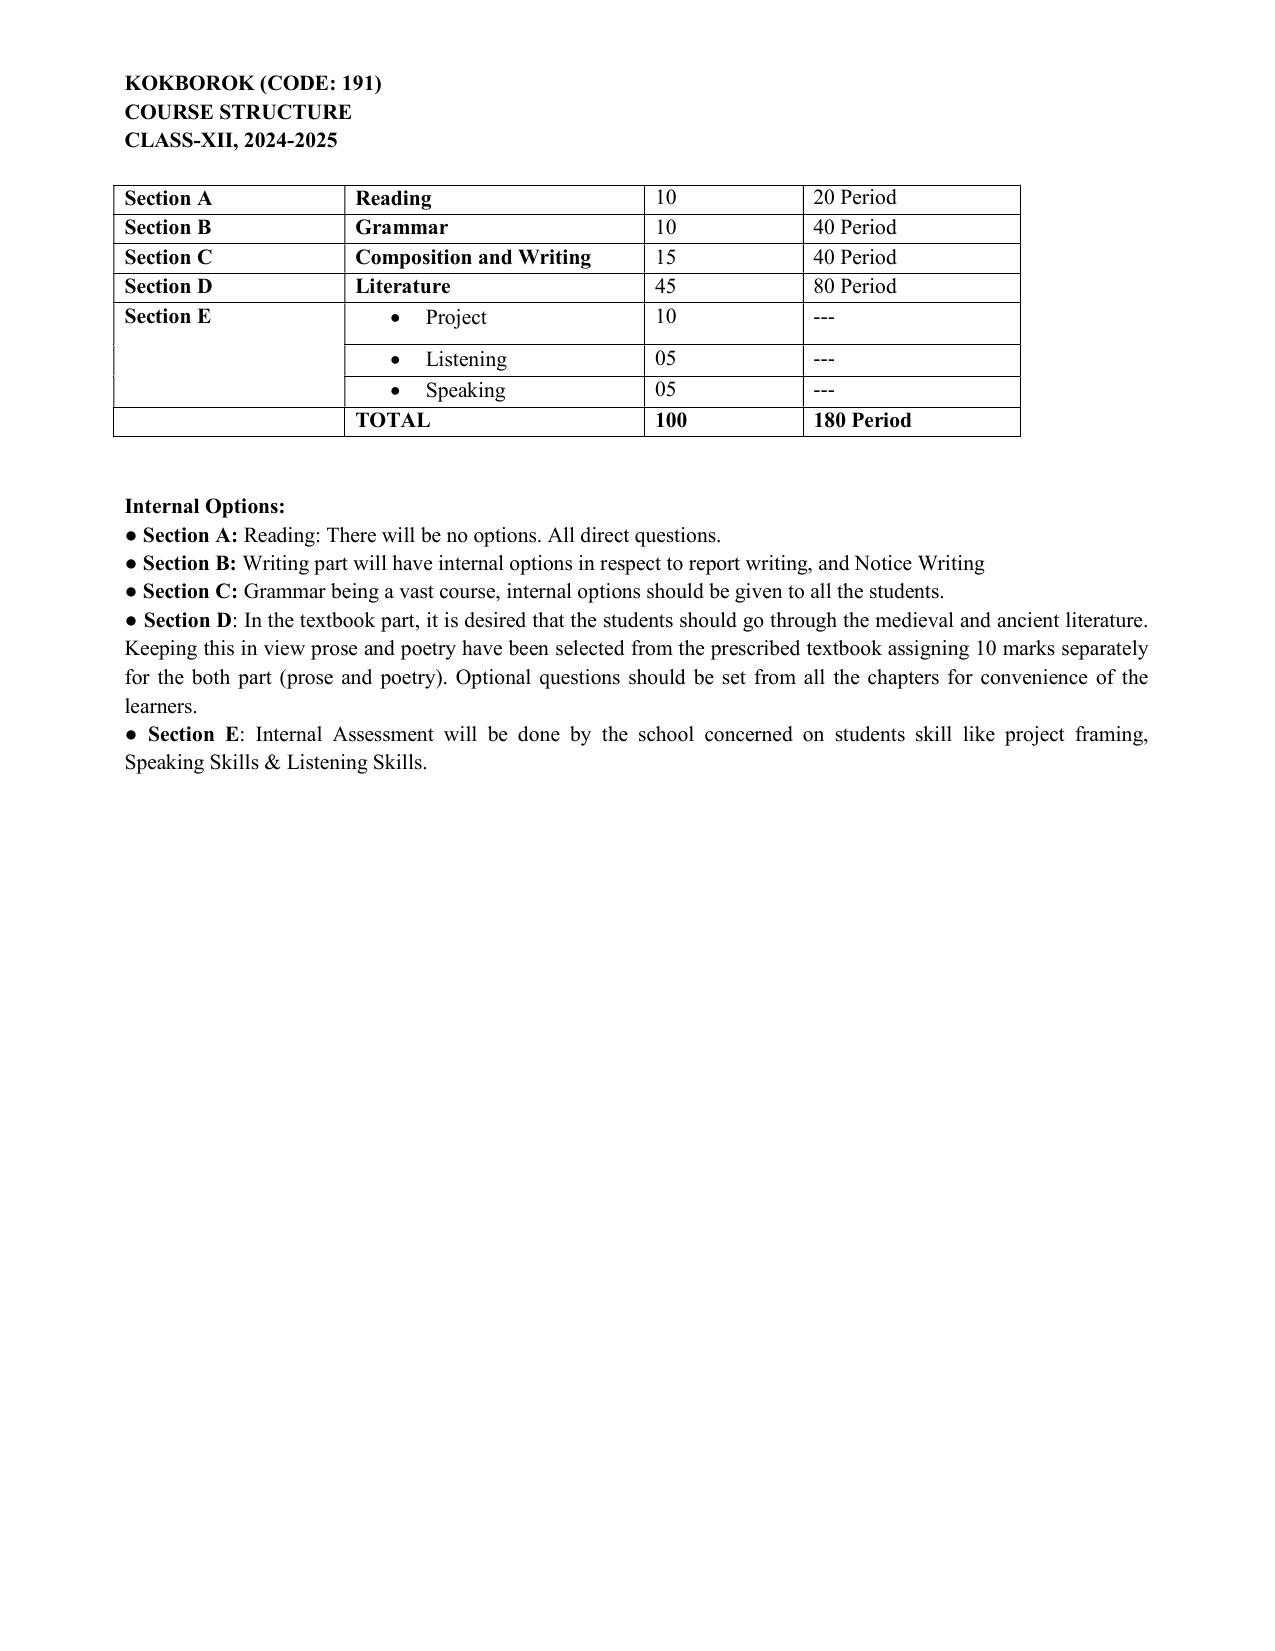 CBSE Class XI & XII Kokborok Syllabus - Page 7